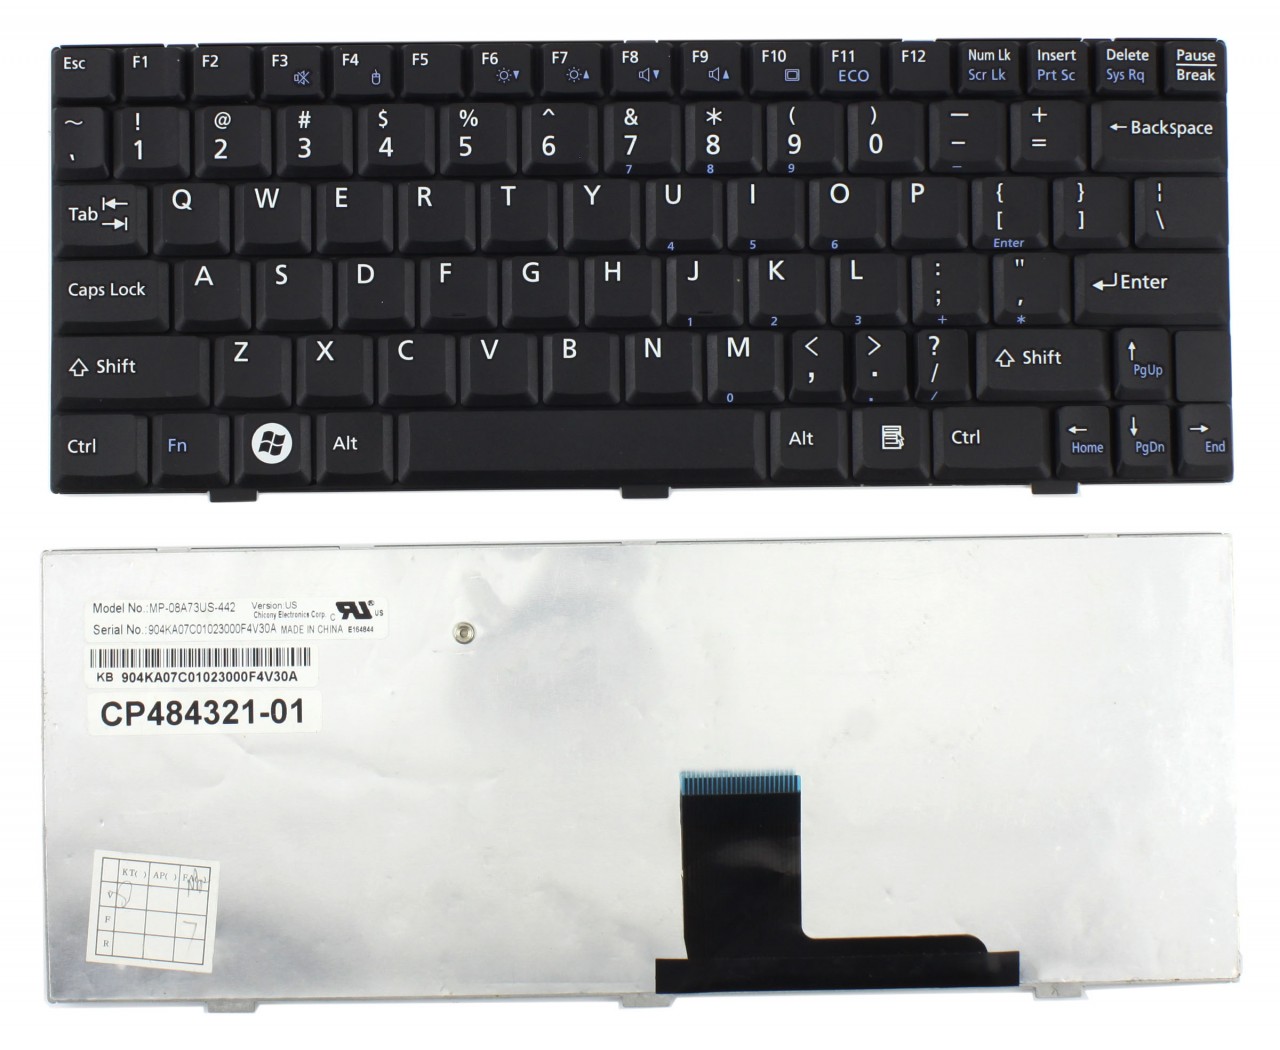 Tastatura Fujitsu Siemens LifeBook PH530